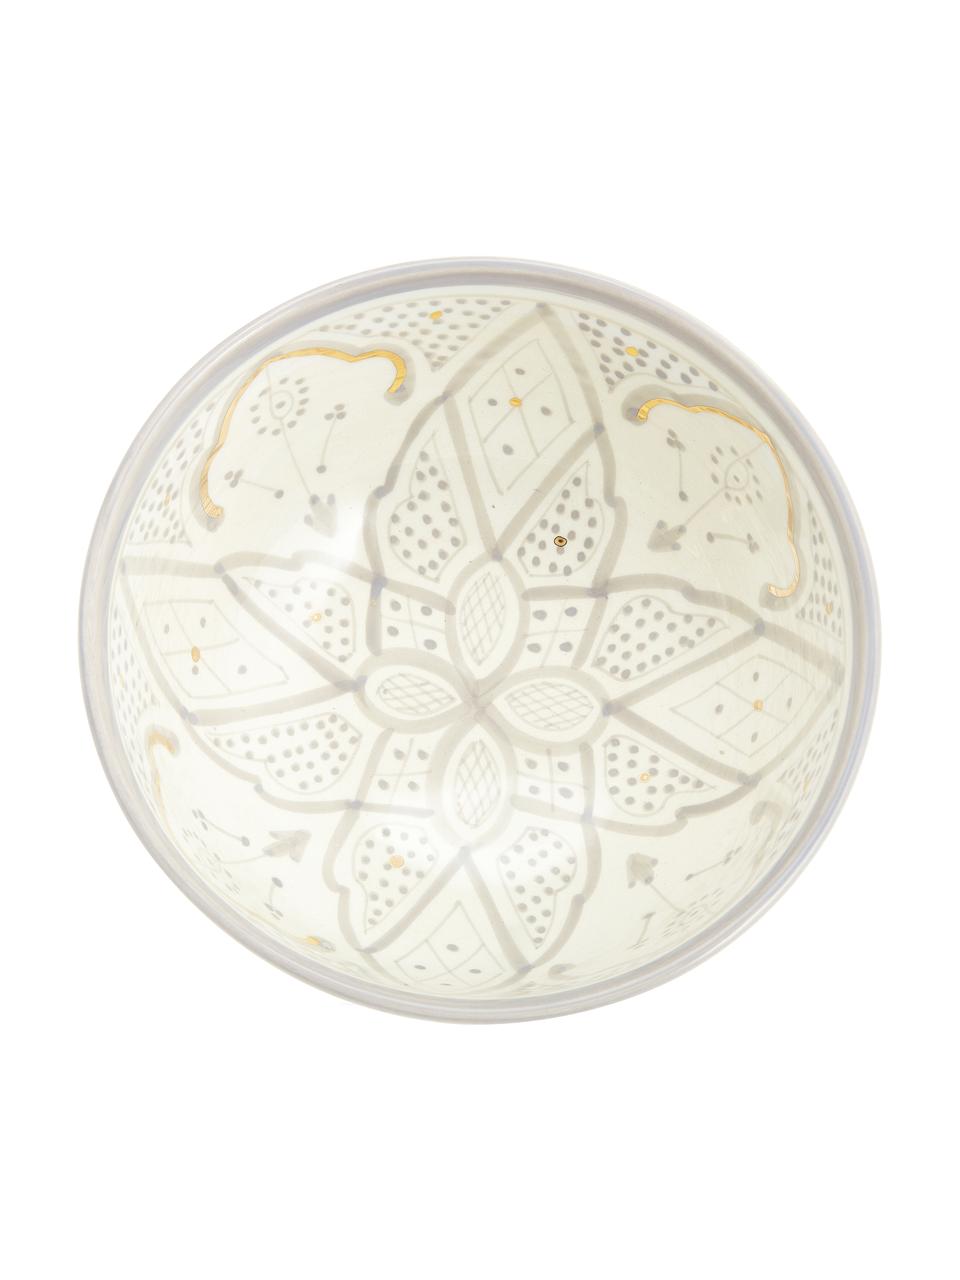 Handgemaakte Marokkaanse slakom Beldi met gouden details, Ø 25 cm, Keramiek, Lichtgrijs, crèmekleurig, goudkleurig, Ø 25 x H 12 cm